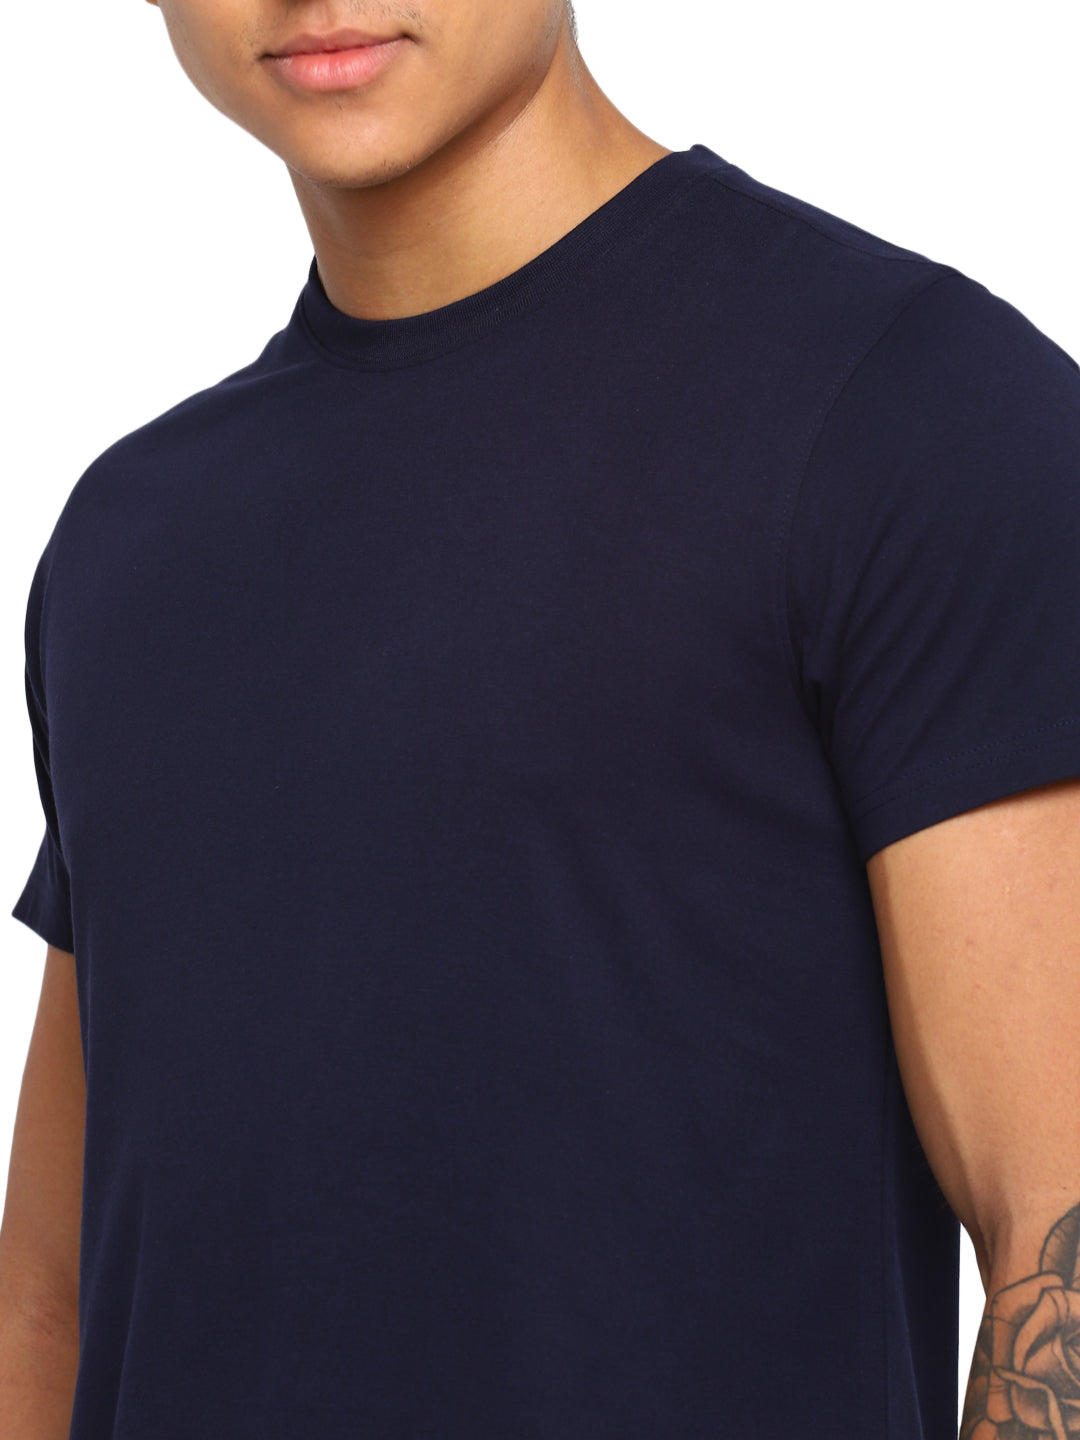 100% Cotton Round Neck T-Shirt for Men Regular Fit - Navy